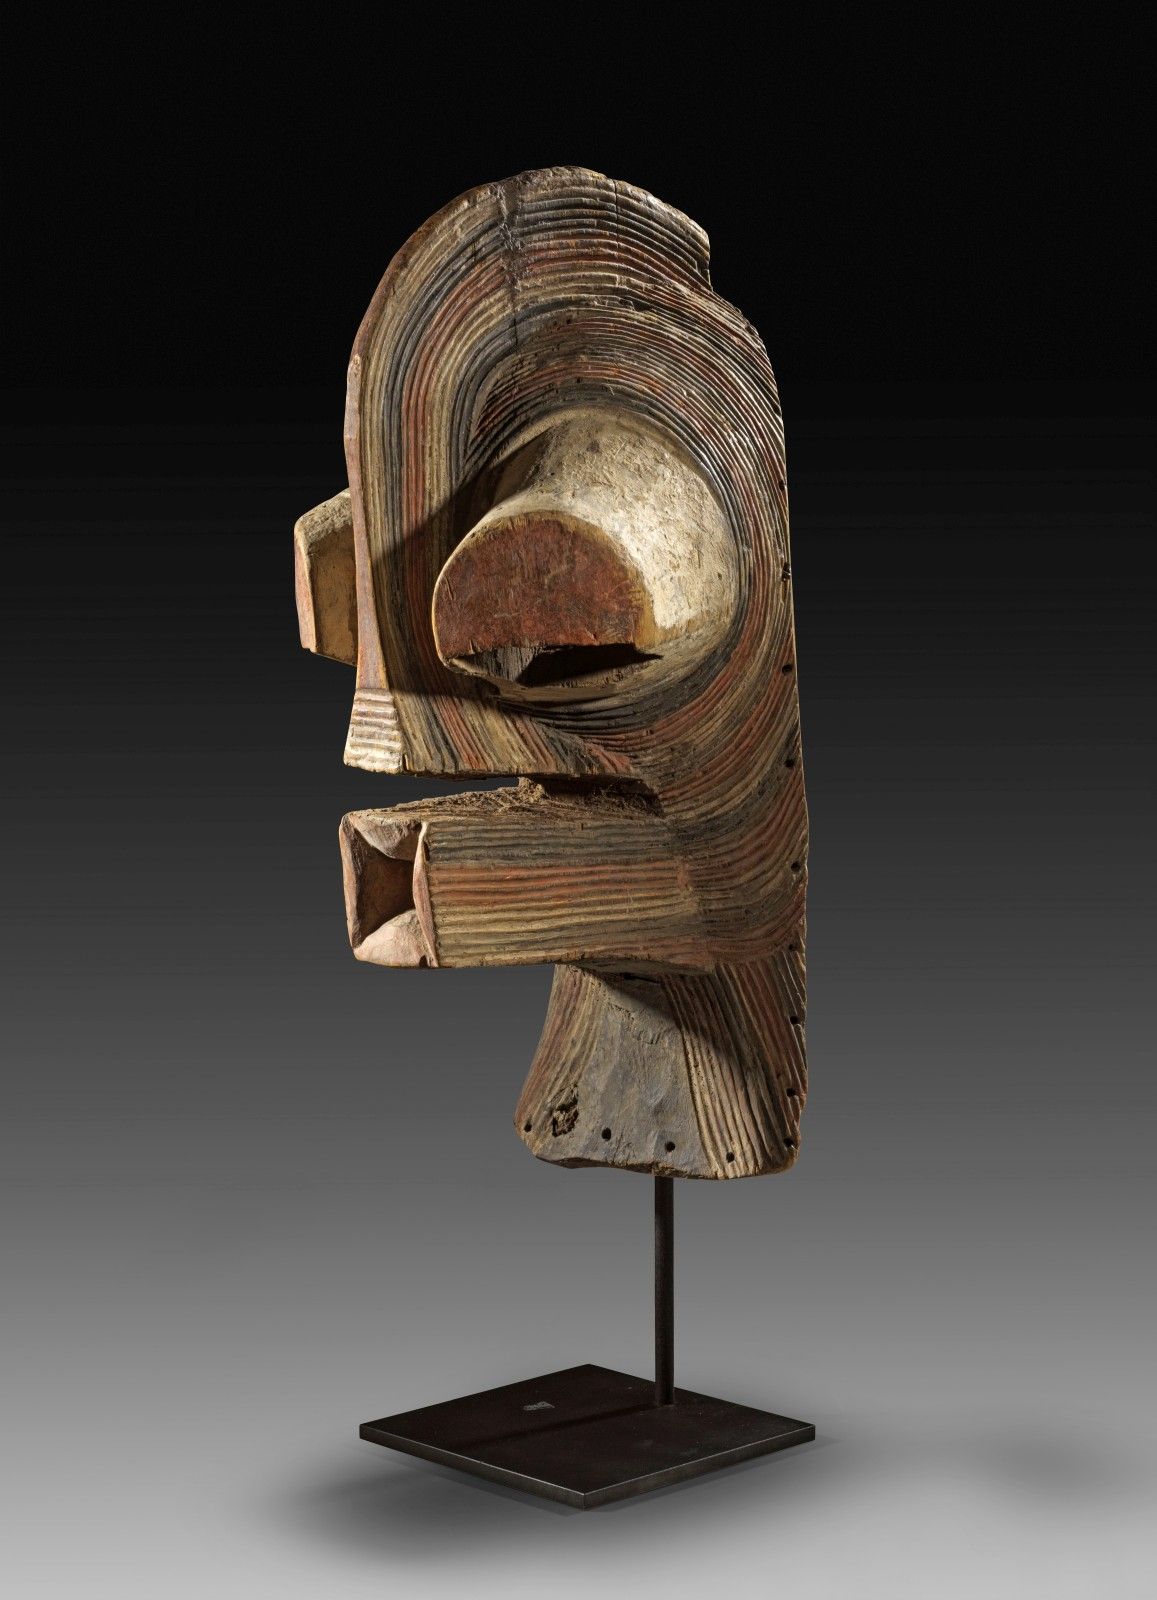 Große Maske der Songe, kifwebe. 颂歌的大面具，kifwebe。D.R. Congo.高61厘米。处于典型的状态，有红、白、黑三色&hellip;